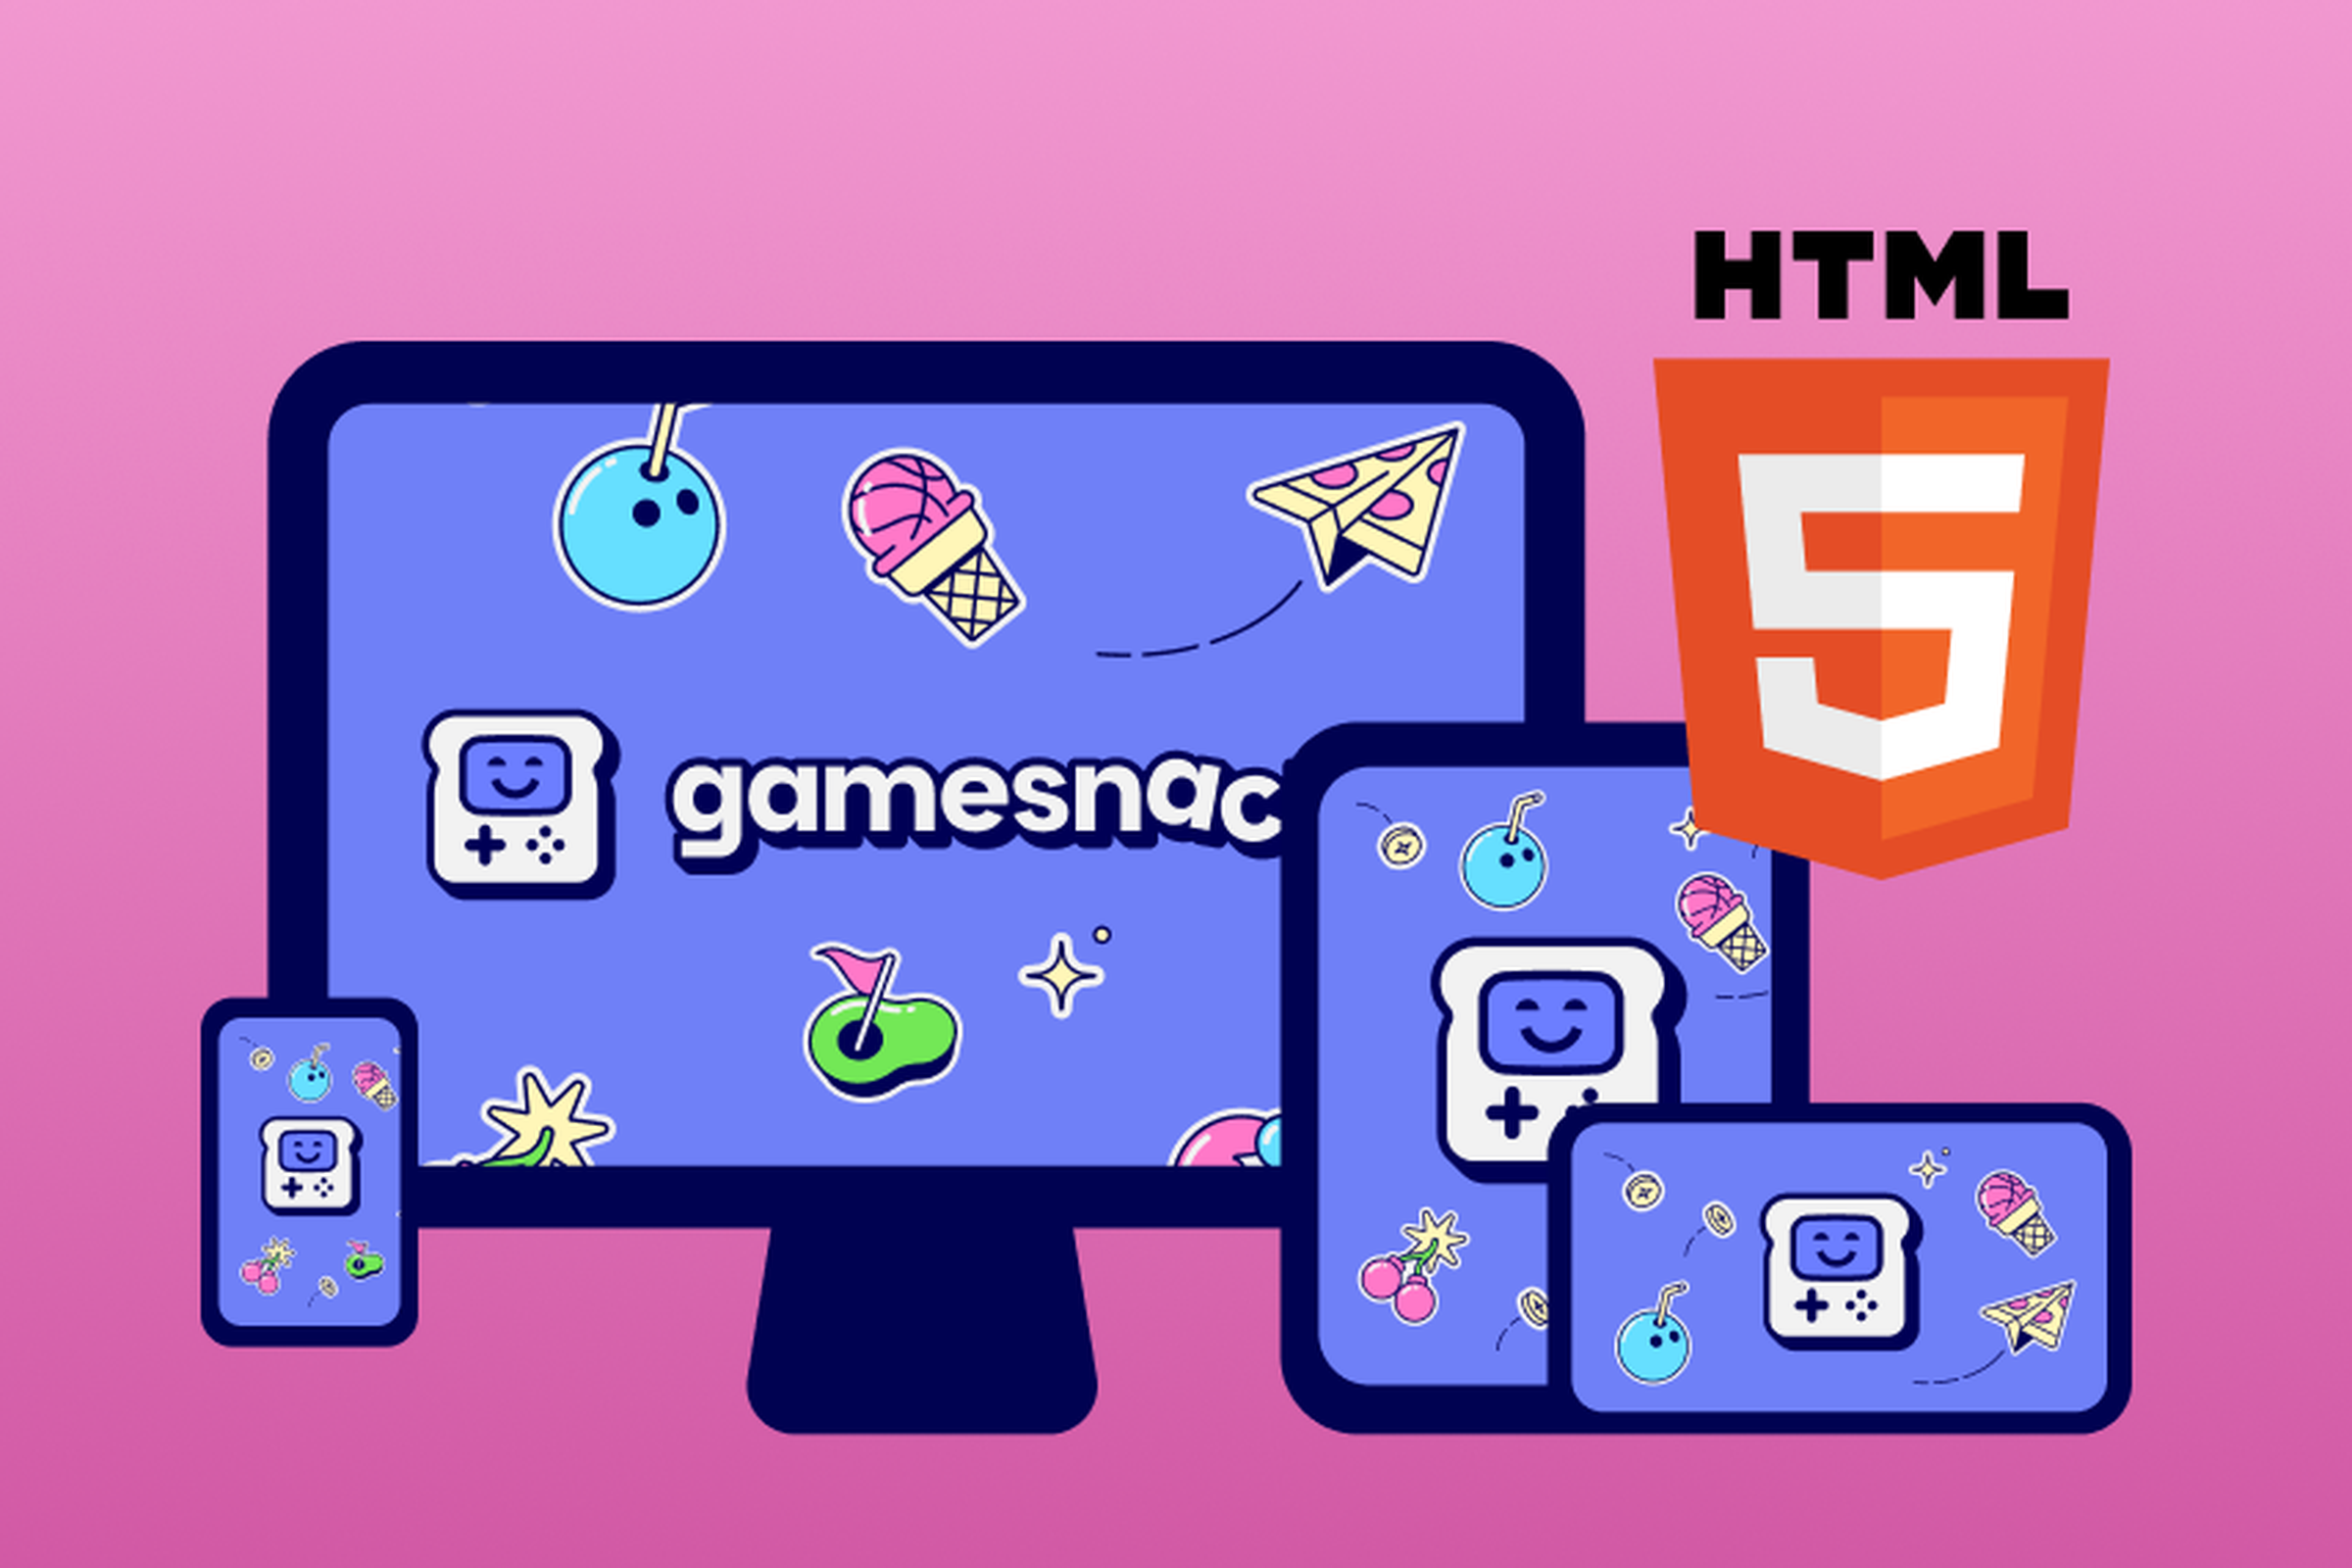 Game html file game. Html games. Html5 games. Play html games. Android auto игры Gamesnacks.